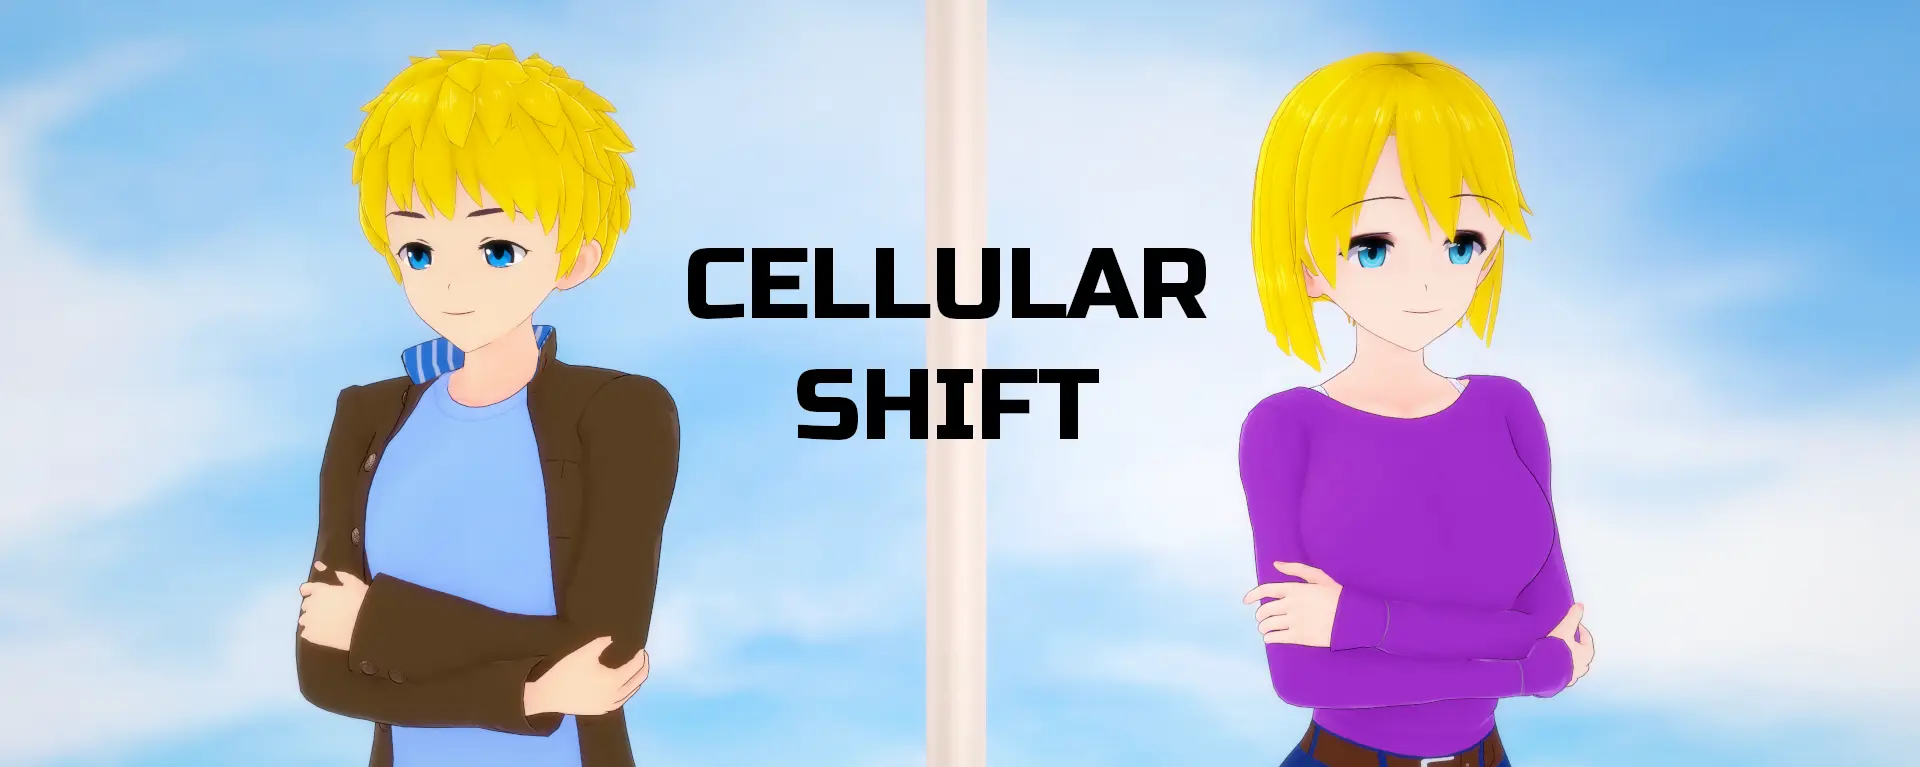 Cellular Shift [v0.1a] main image